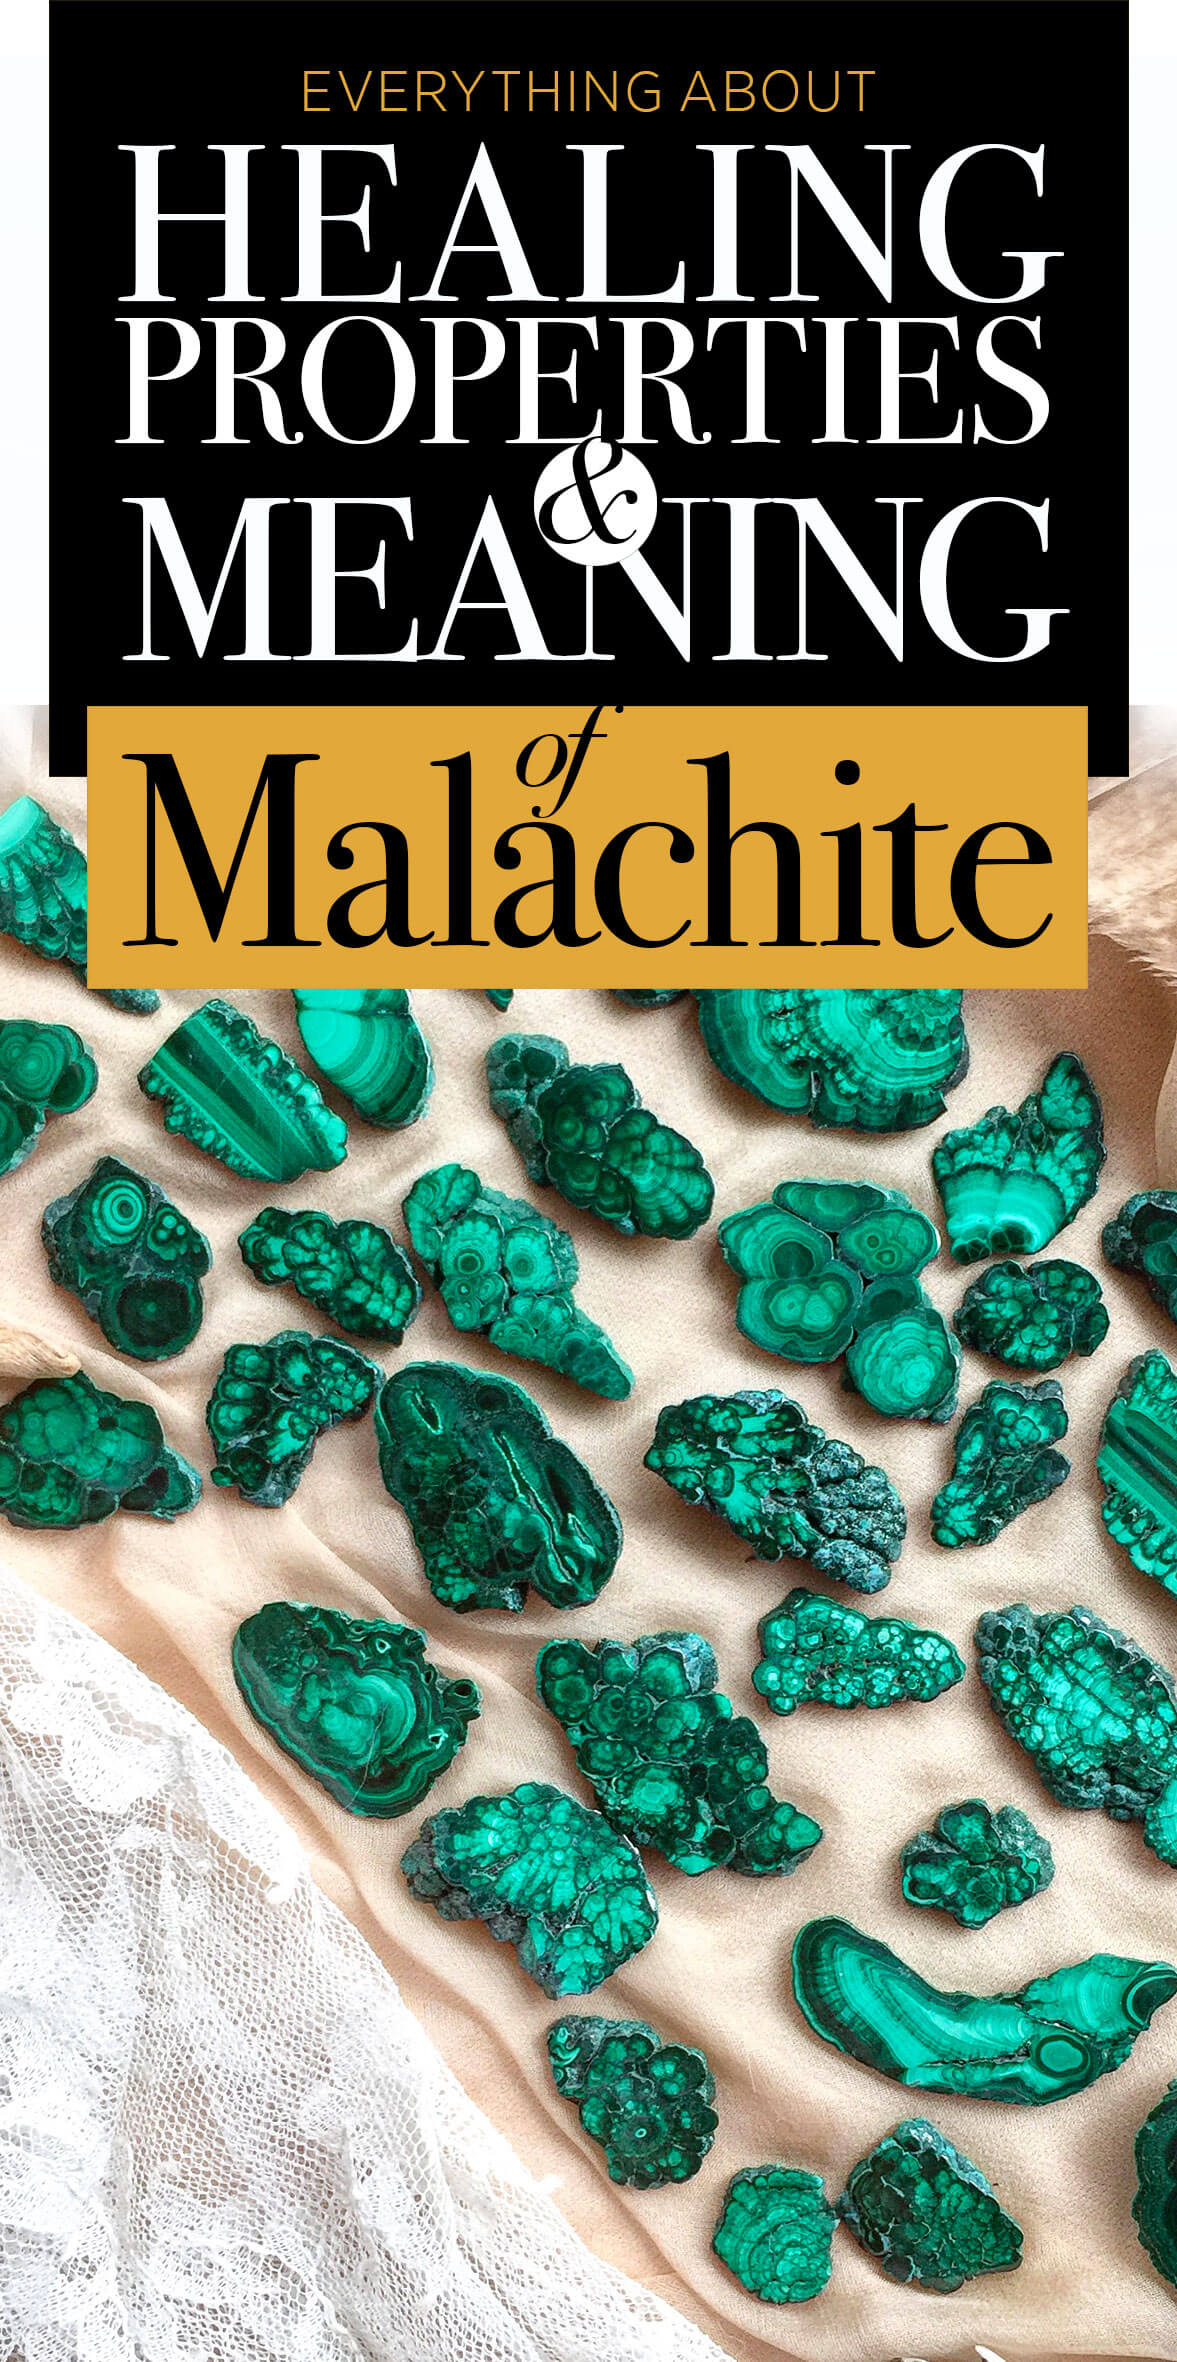 Malachite Meaning And Benefits Green Malachite Stone Uses